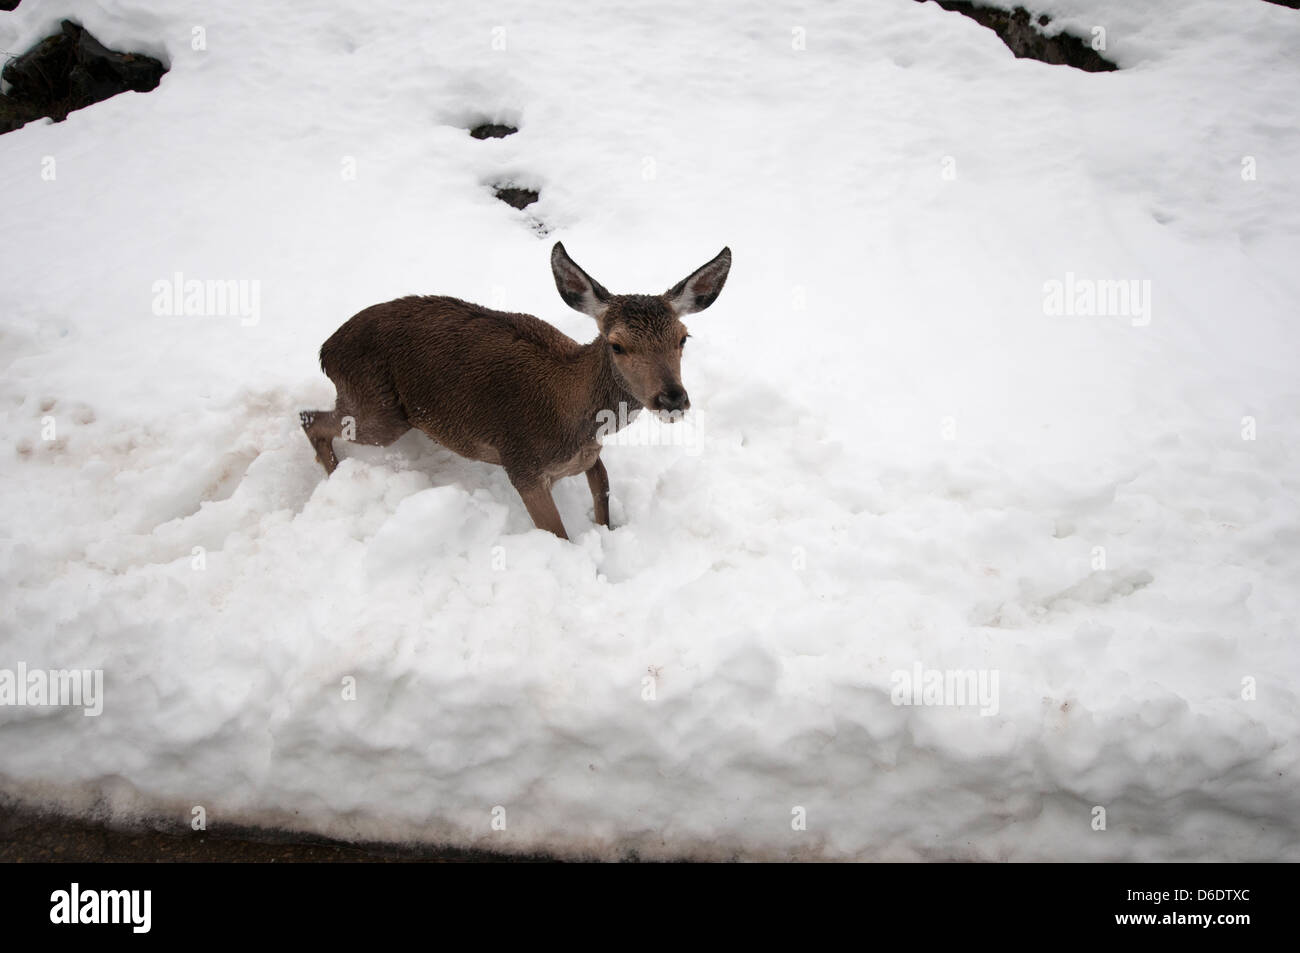 Baby deer in the snow Stock Photo